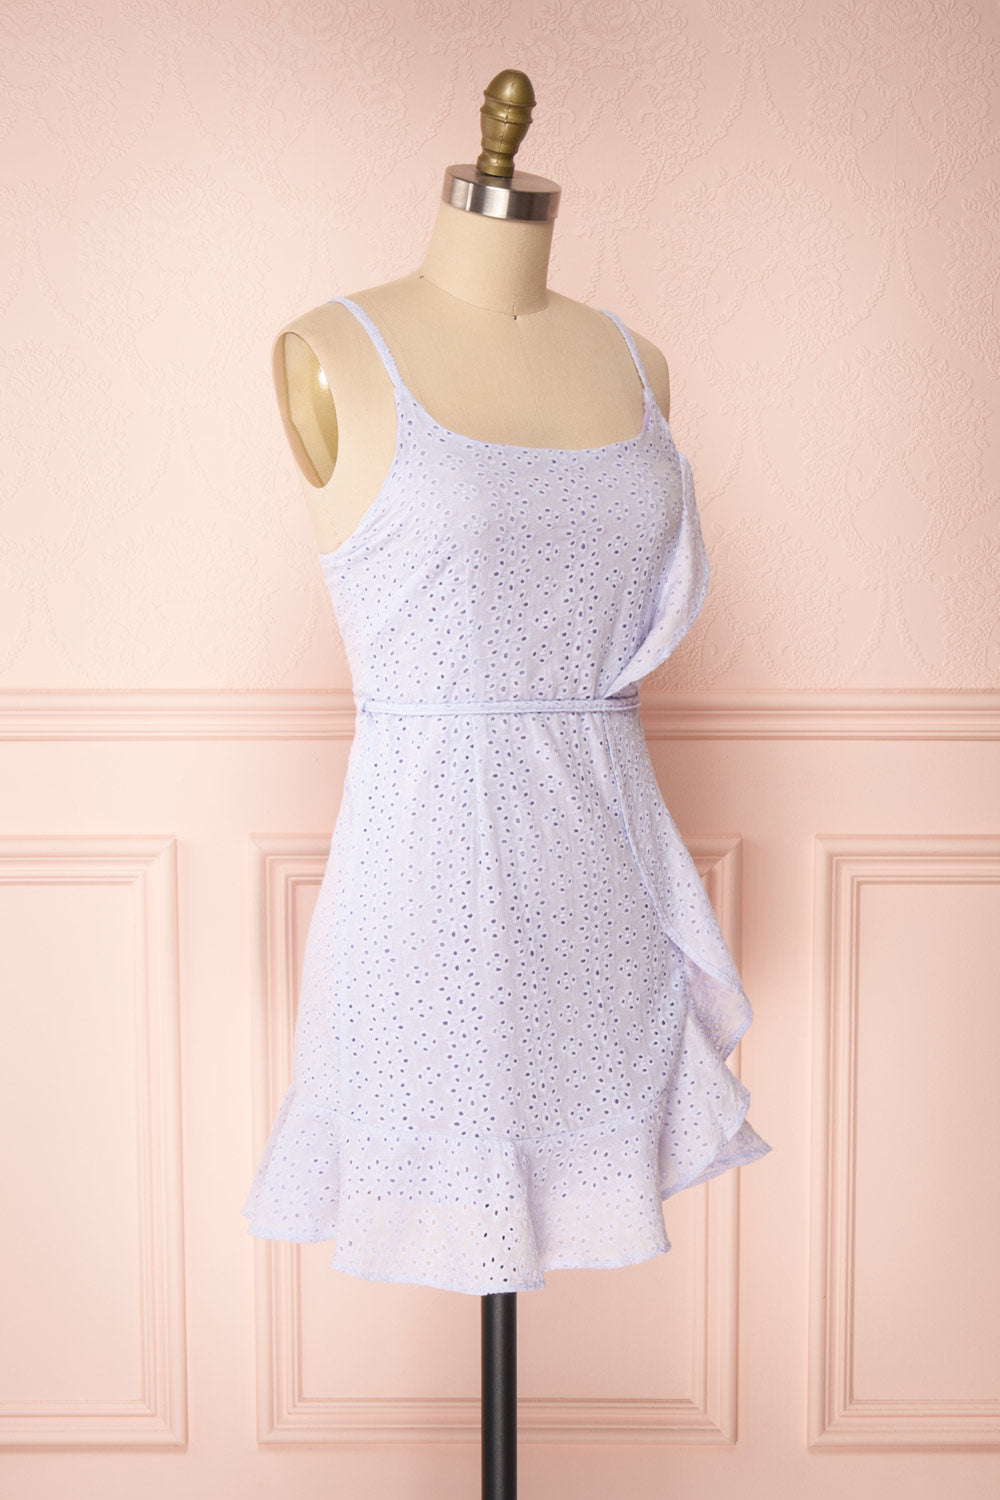 Vidia Lavender Openwork Short Dress | Boutique 1861 side view